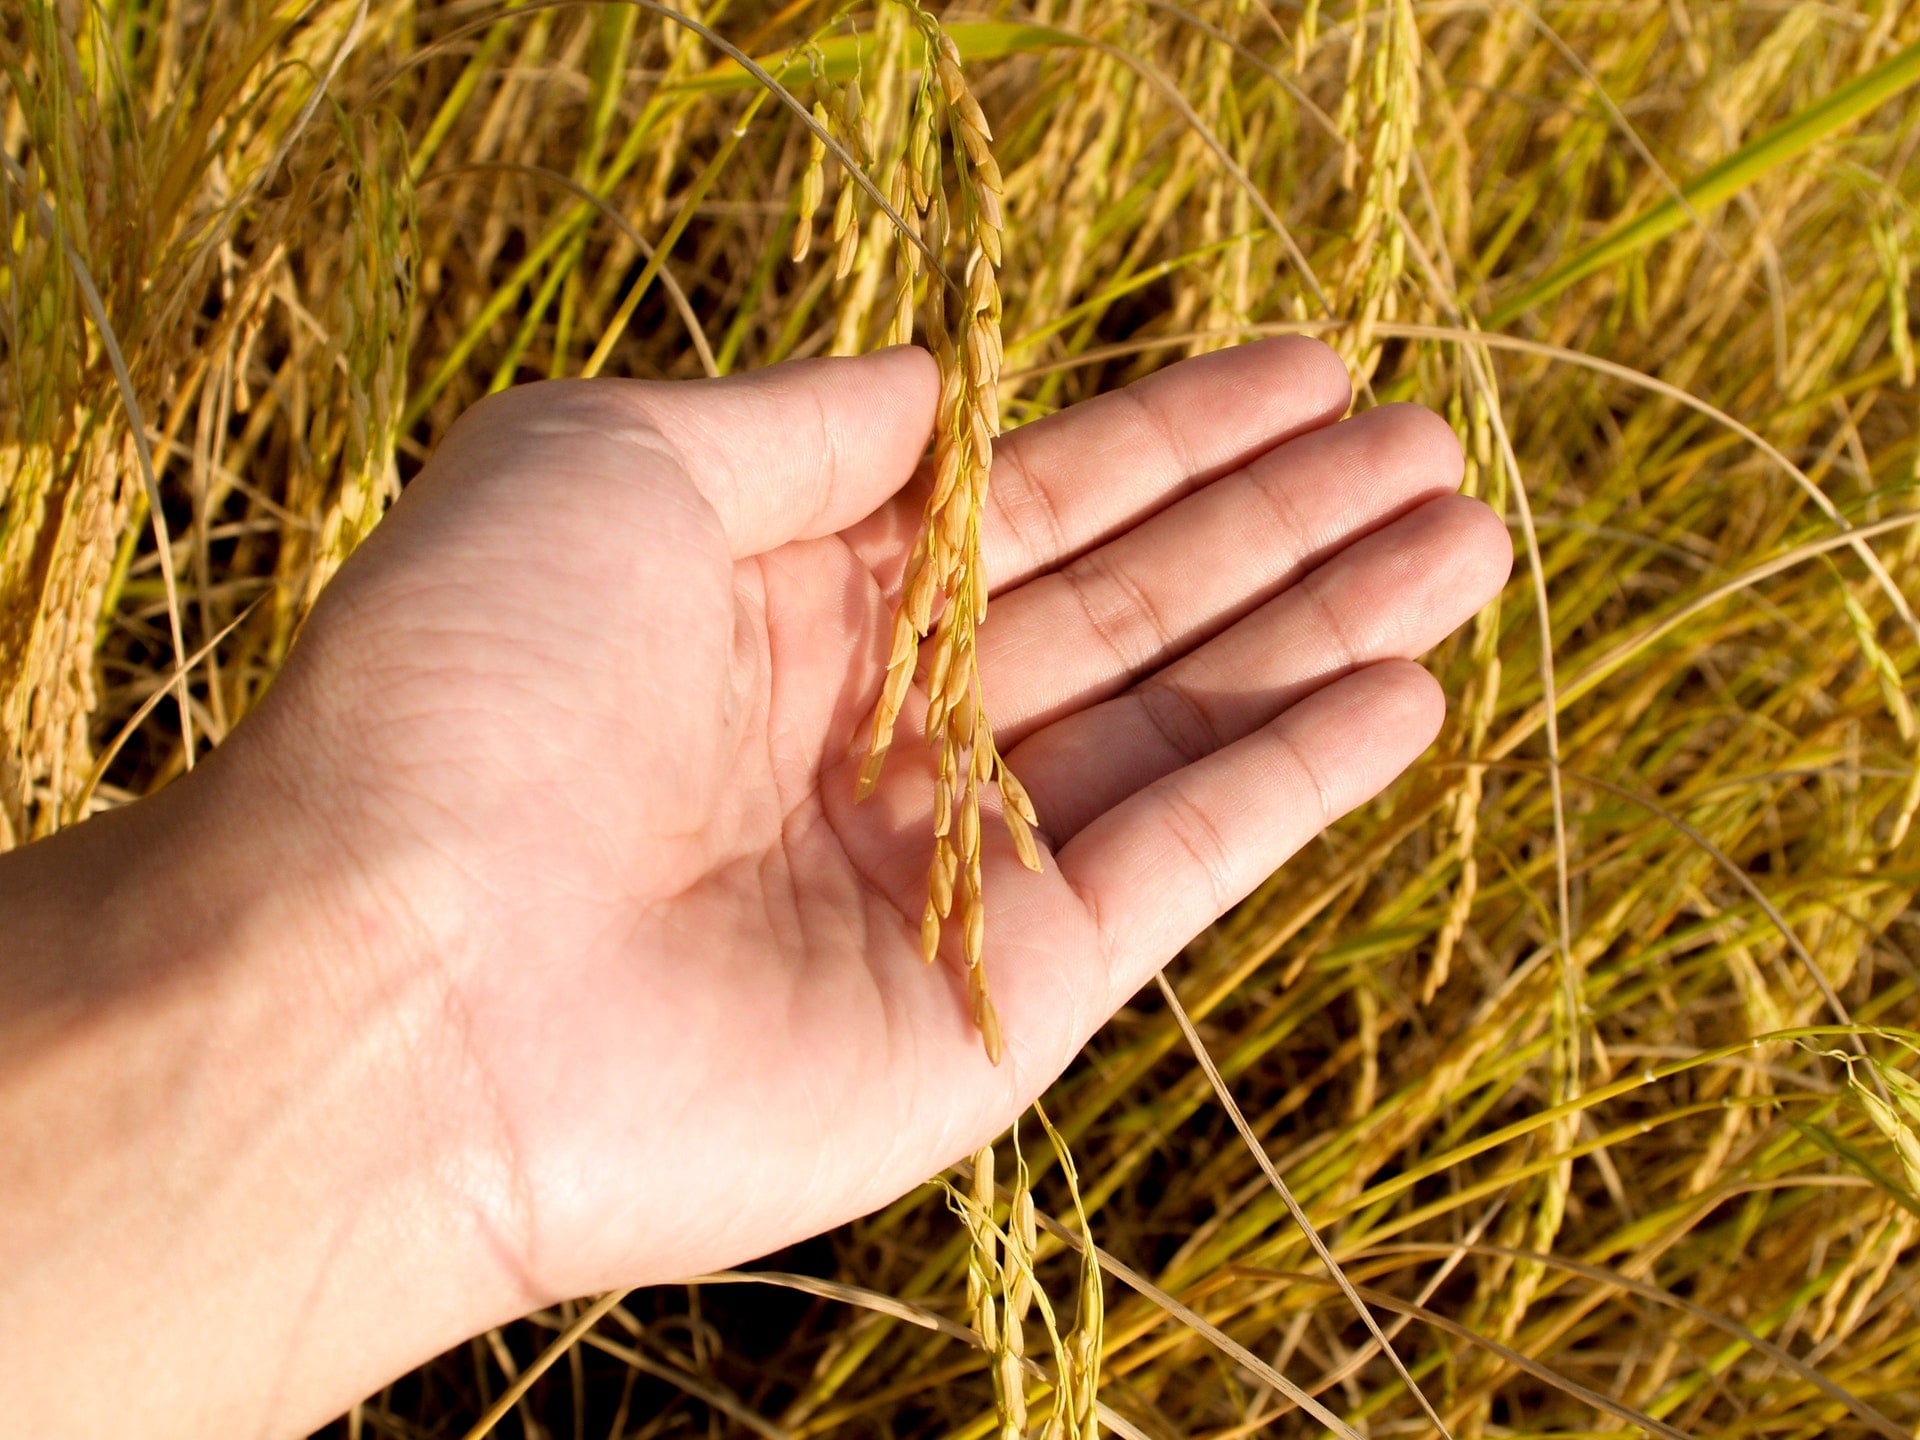 黑心米、農地工廠合法化 多事之秋 新鮮安全白米難找 daytime farm person holding wheat Rice ear plant fresh